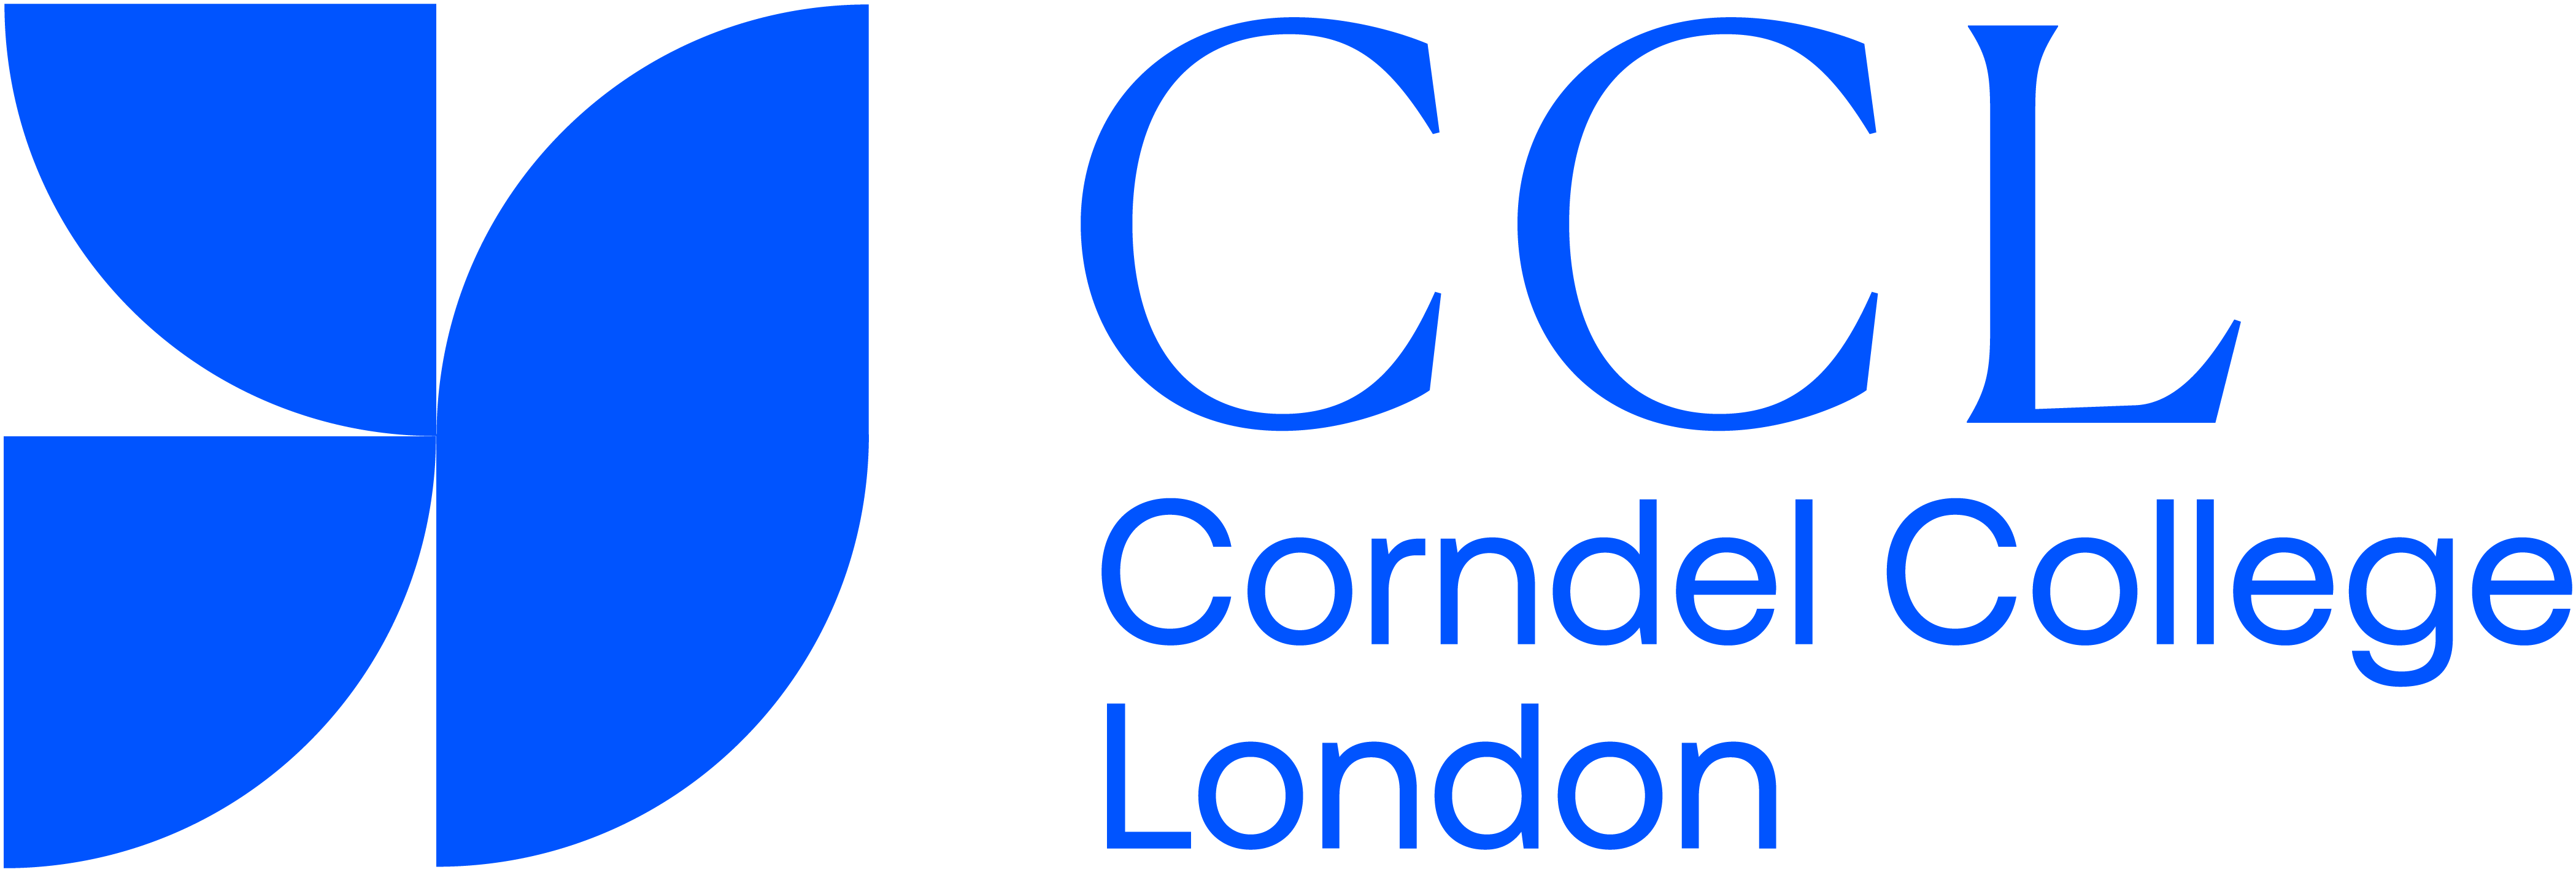 Corndel College London: Explore our Degree Apprenticeships